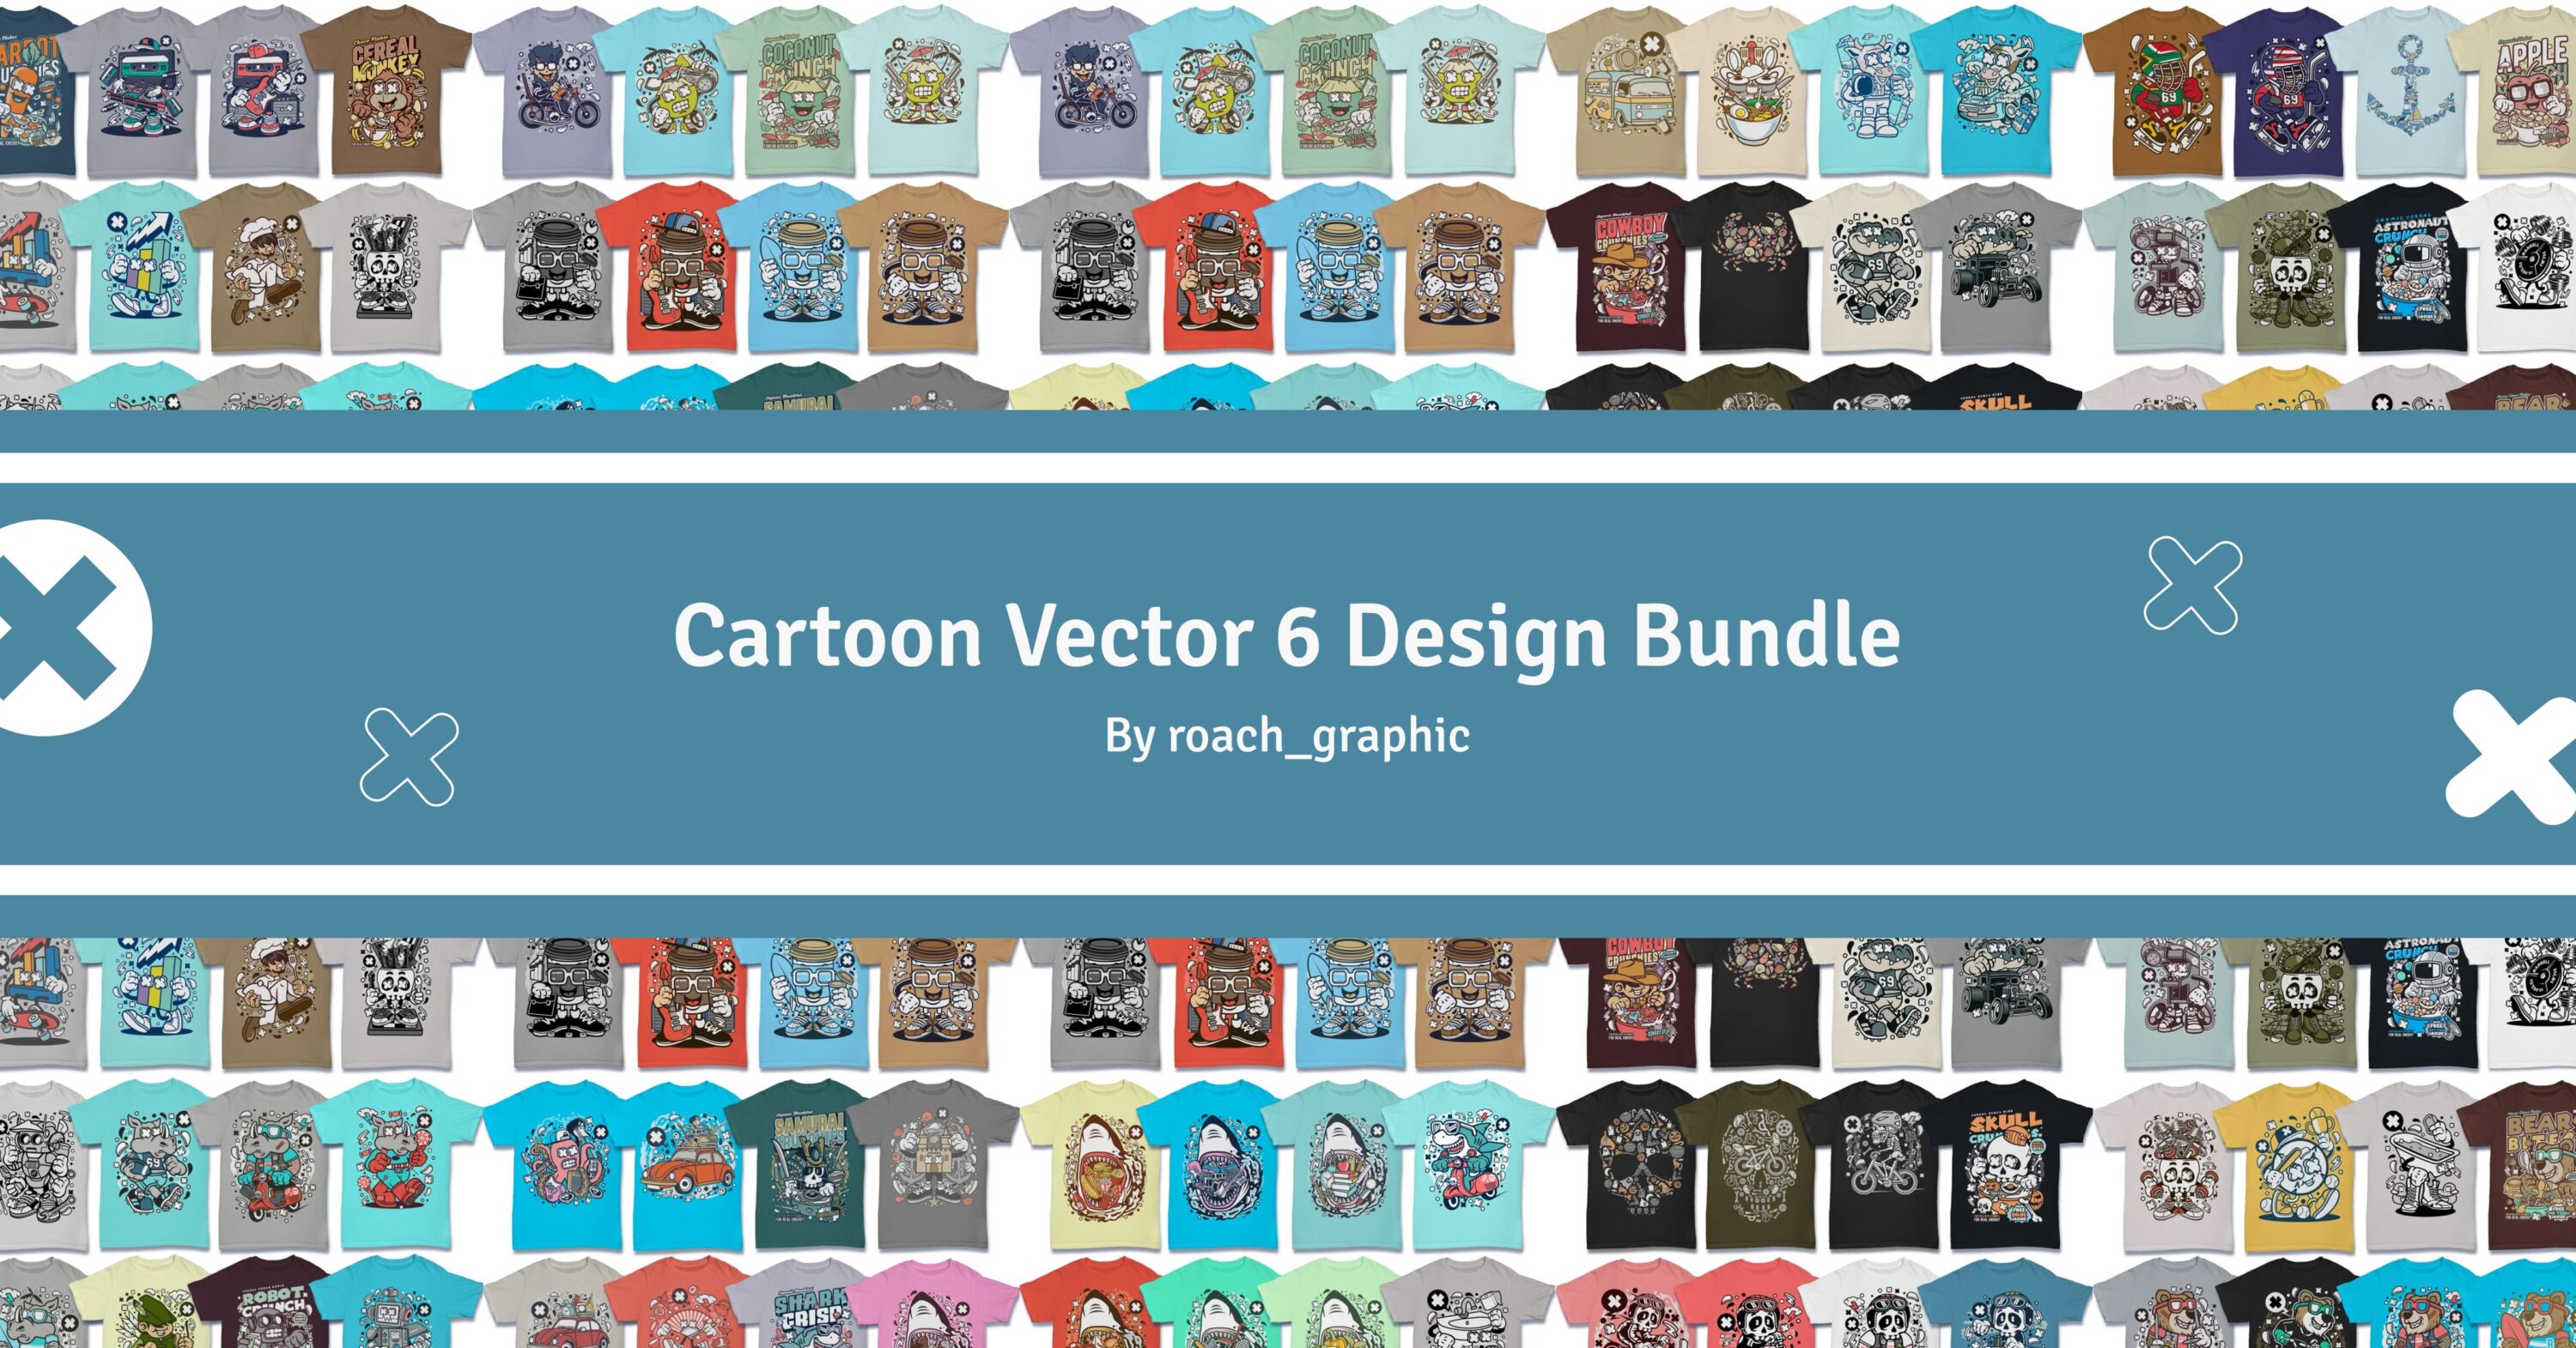 Cartoon Vector #6 Design Bundle facebook image.